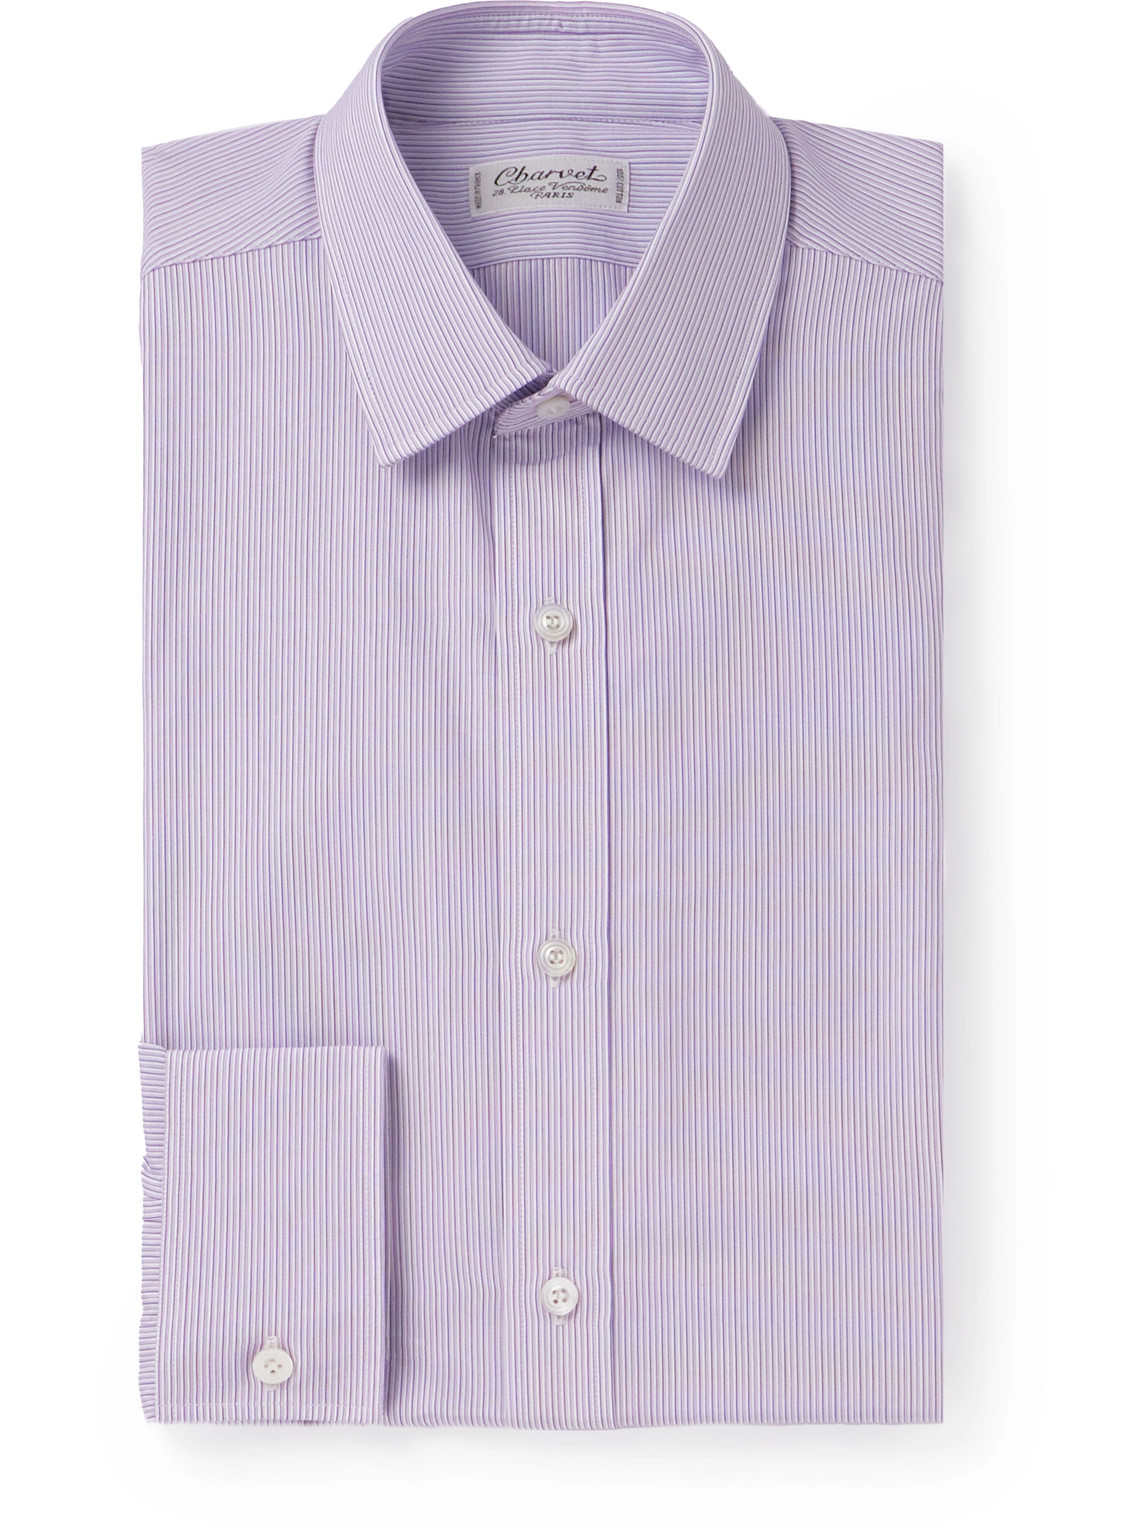 Charvet Striped Cotton Oxford Shirt In Purple